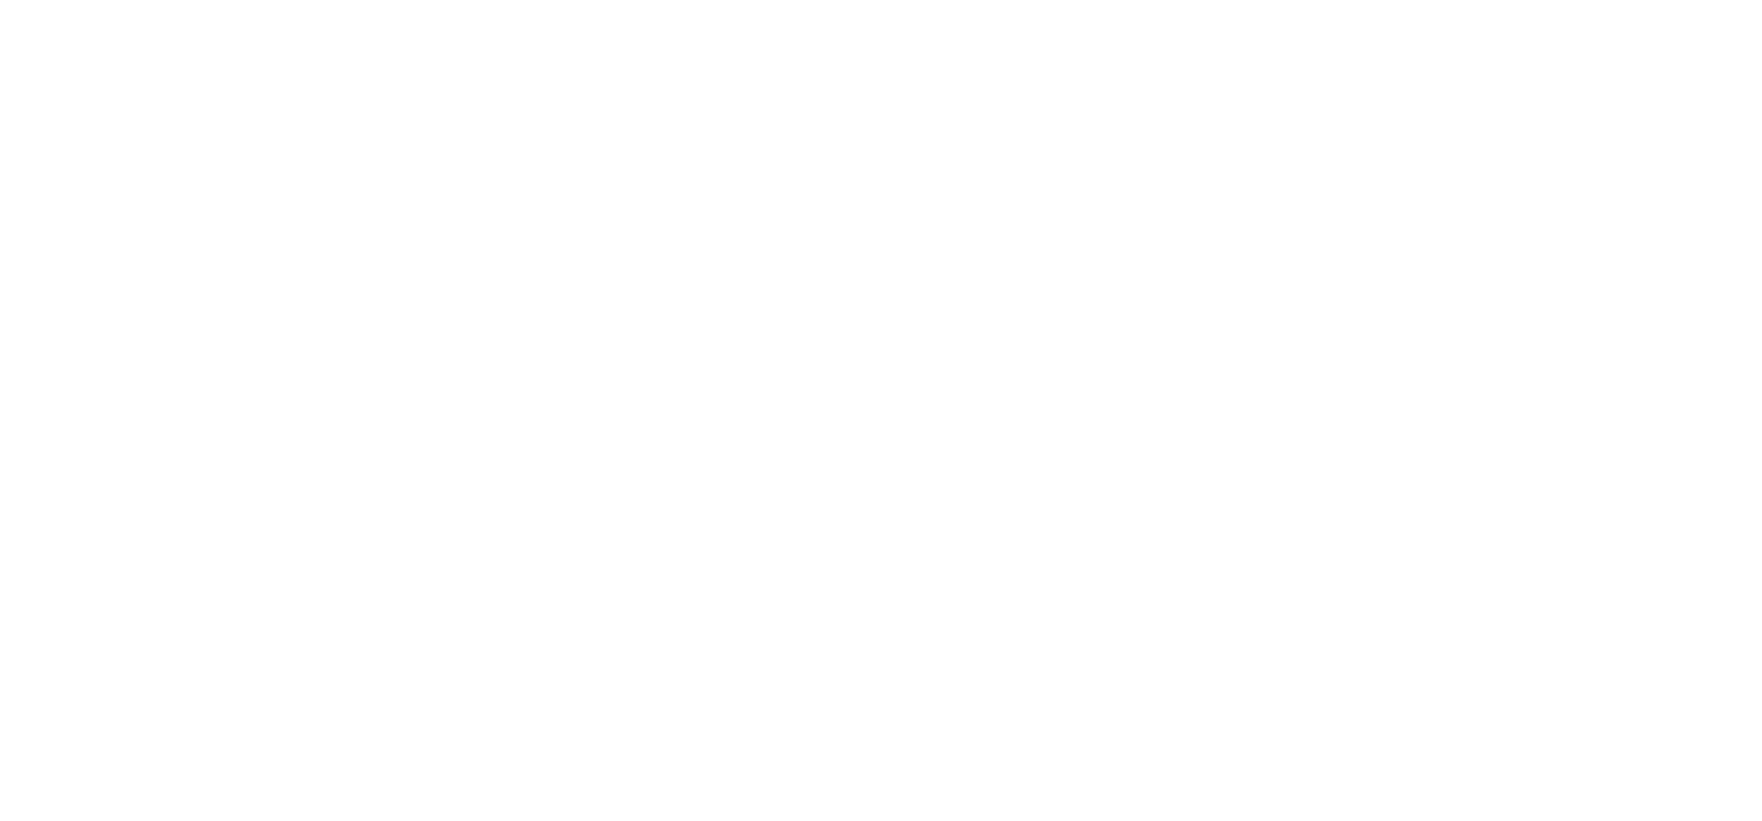 West Tytherley CE Primary School